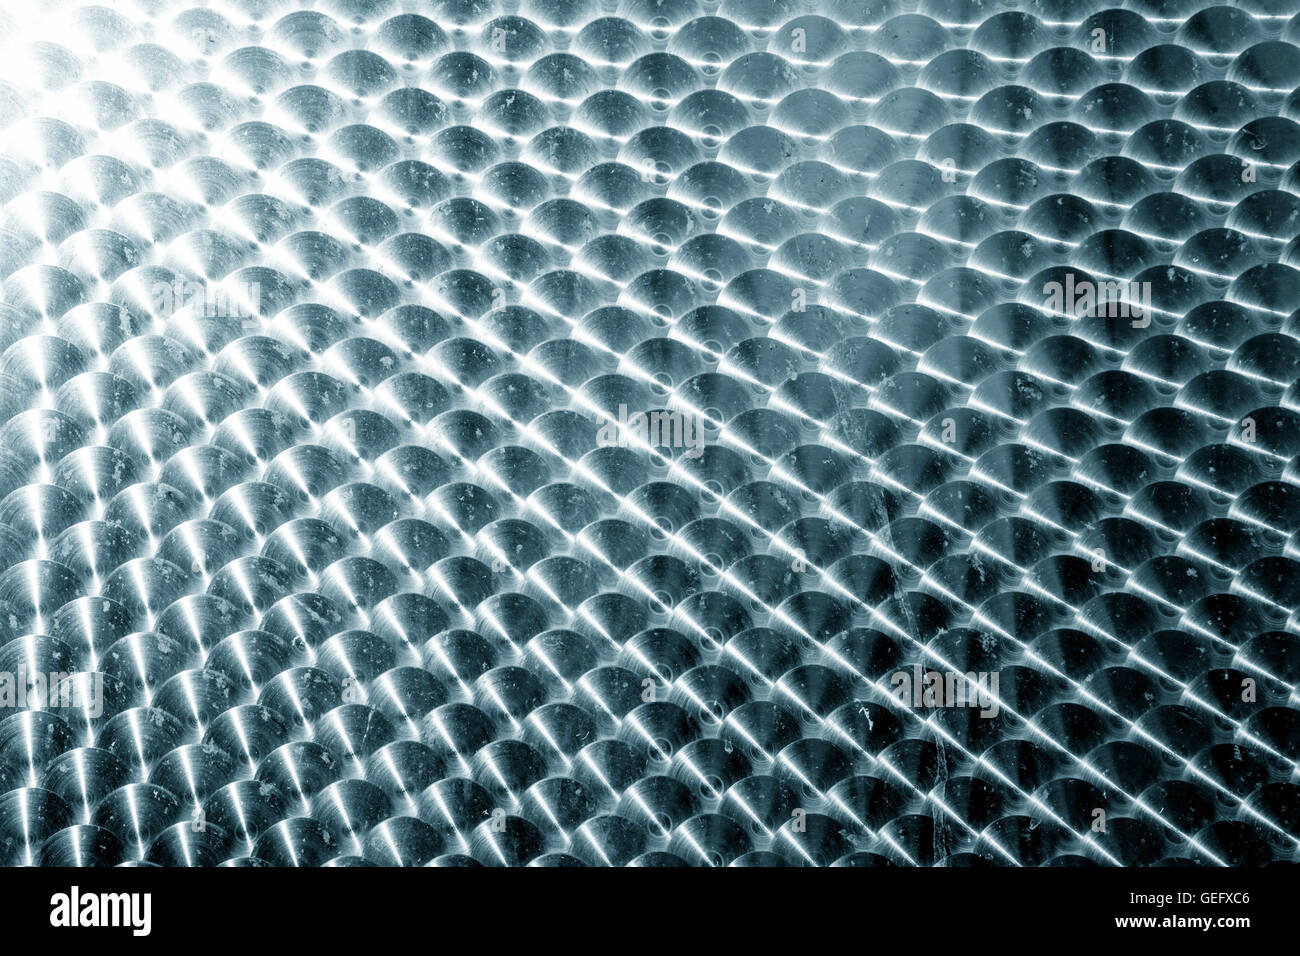 brushed metal texture with circular pattern. Stock Photo